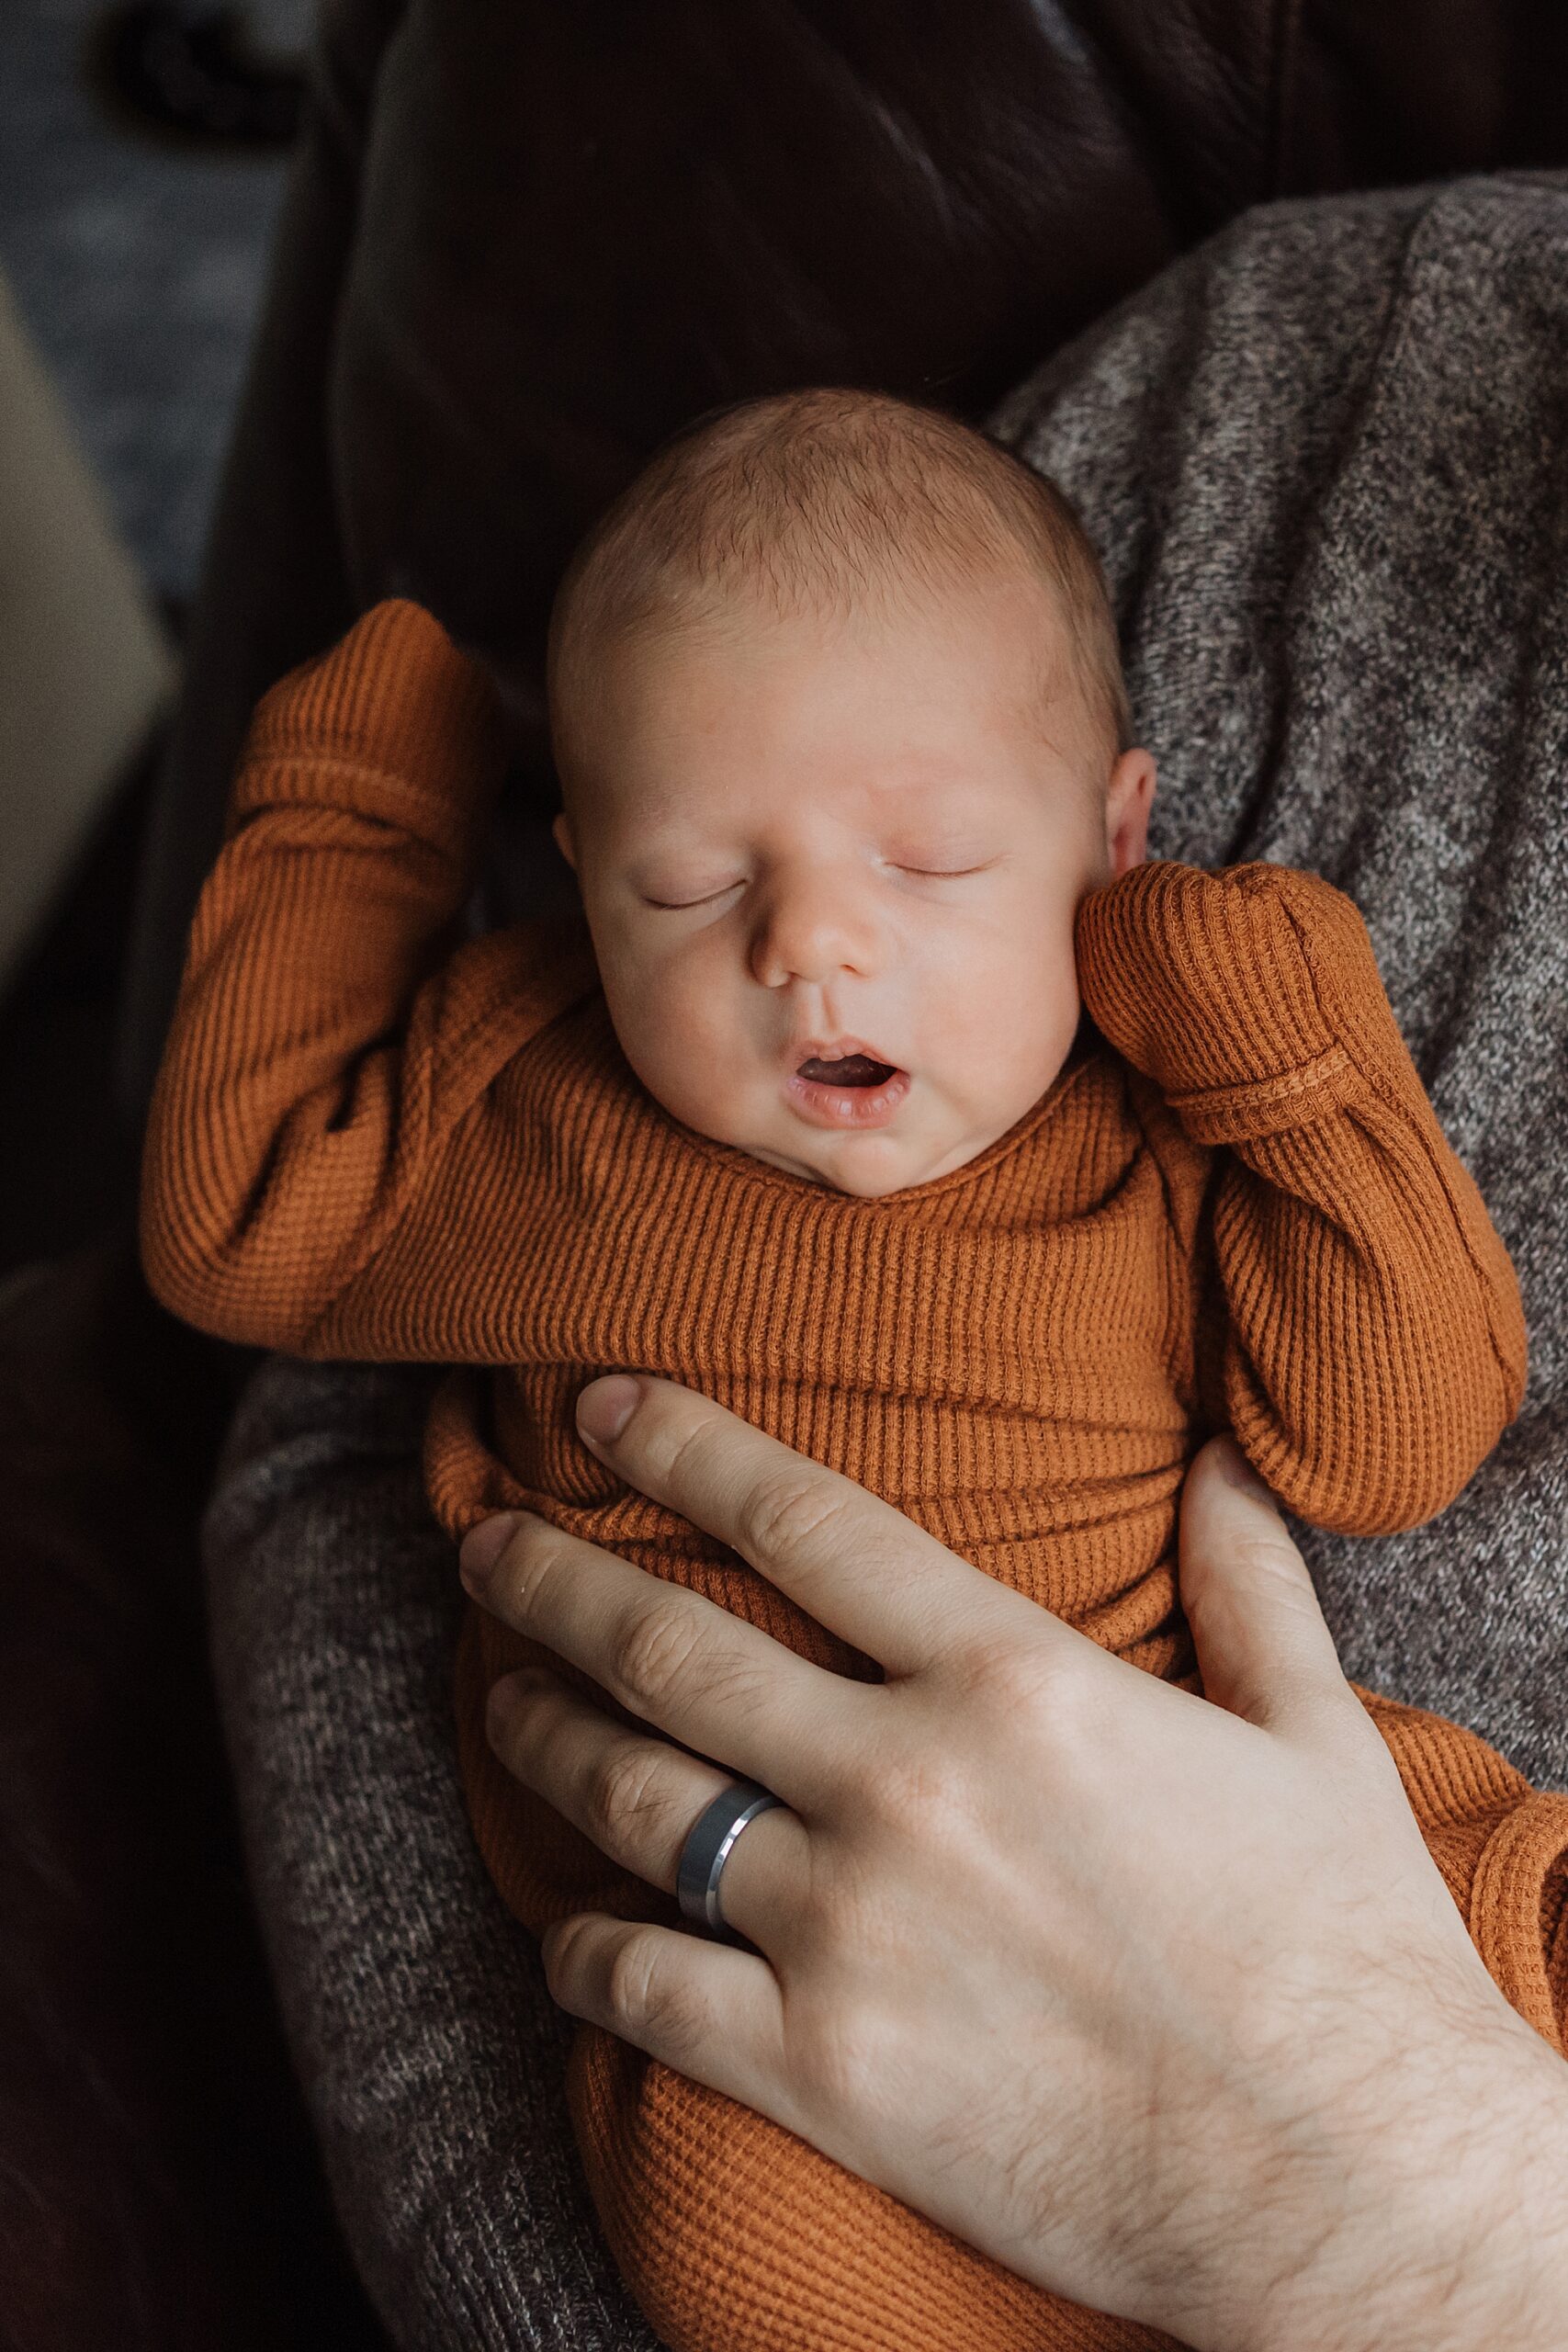 A sleeping newborn cradled in an adult's hands.